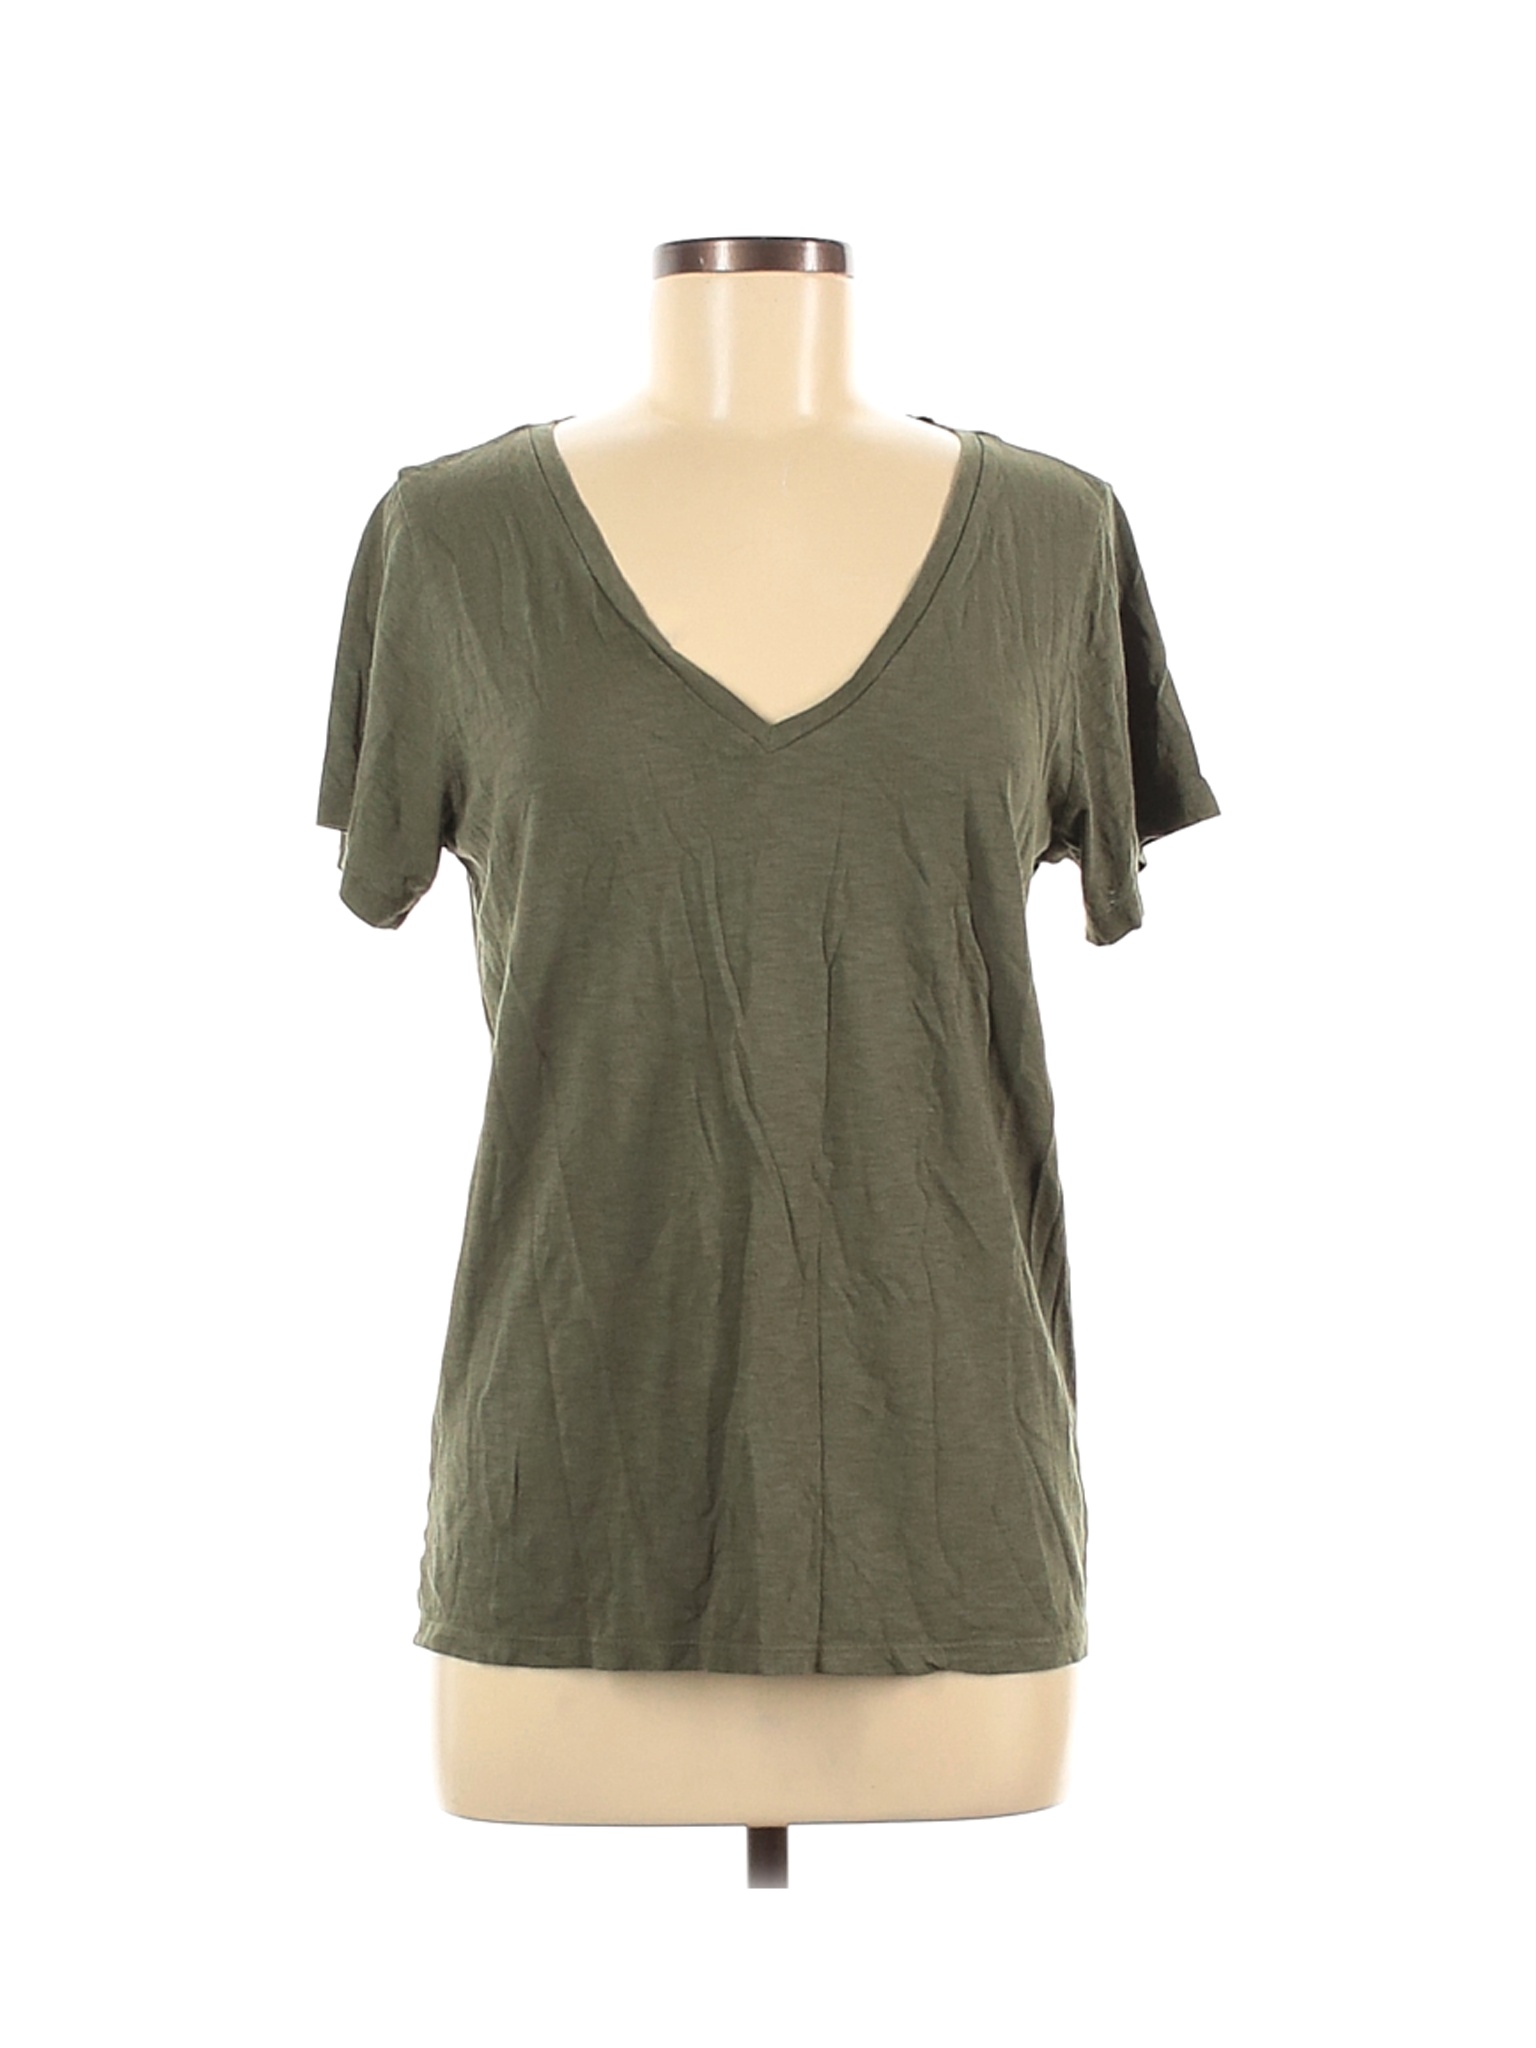 Marine Layer Women Green Short Sleeve T-Shirt L | eBay